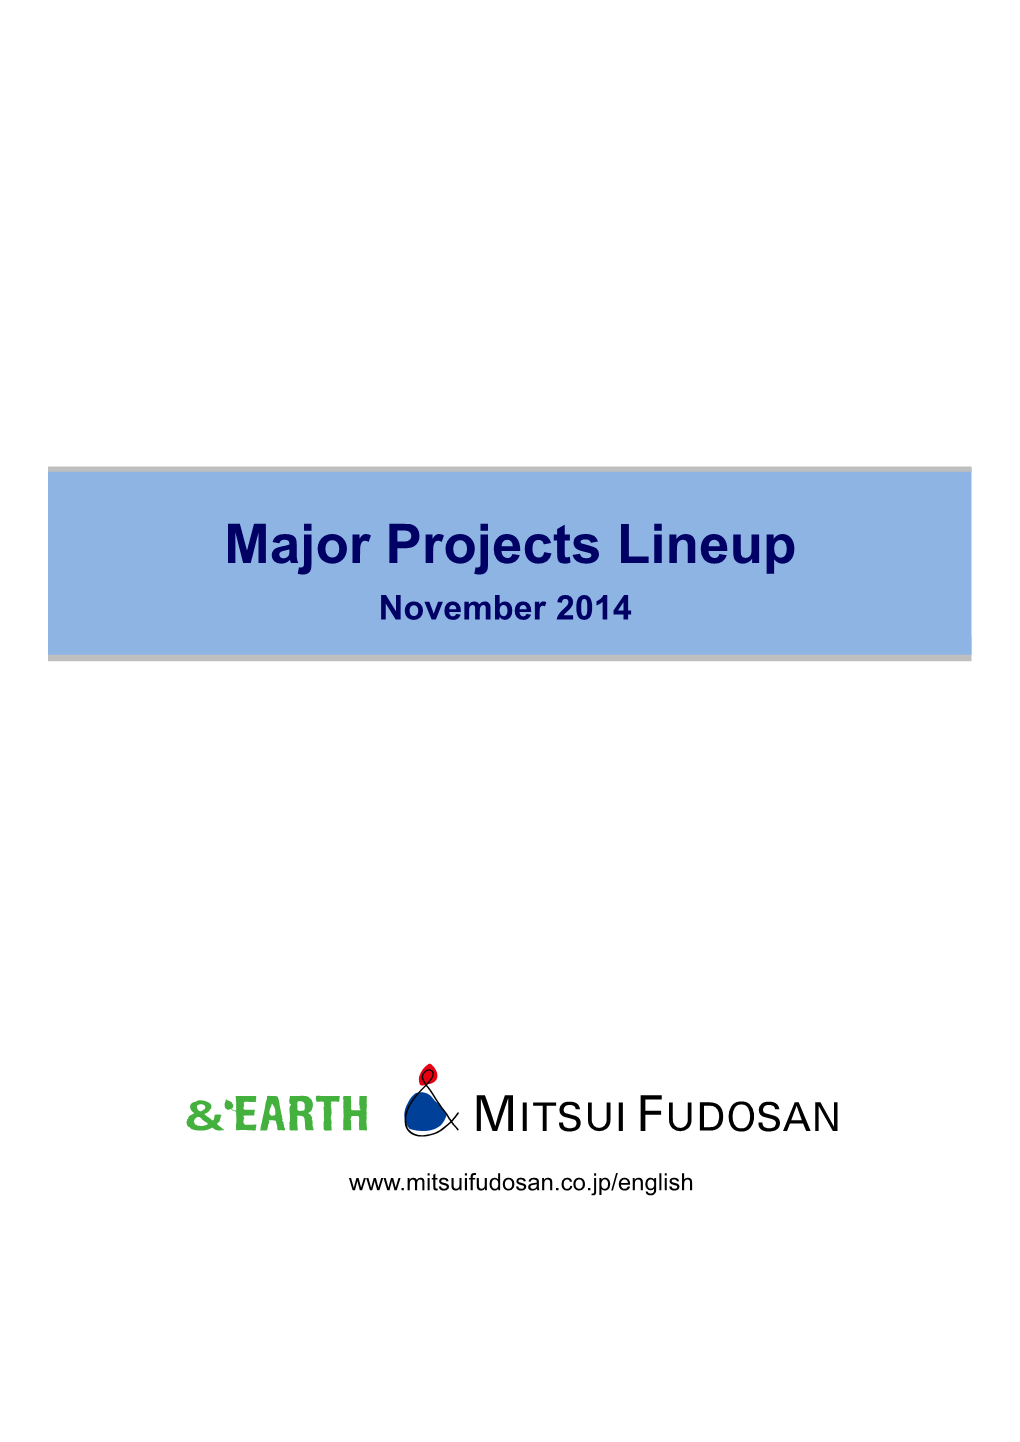 Major Projects Lineup November 2014